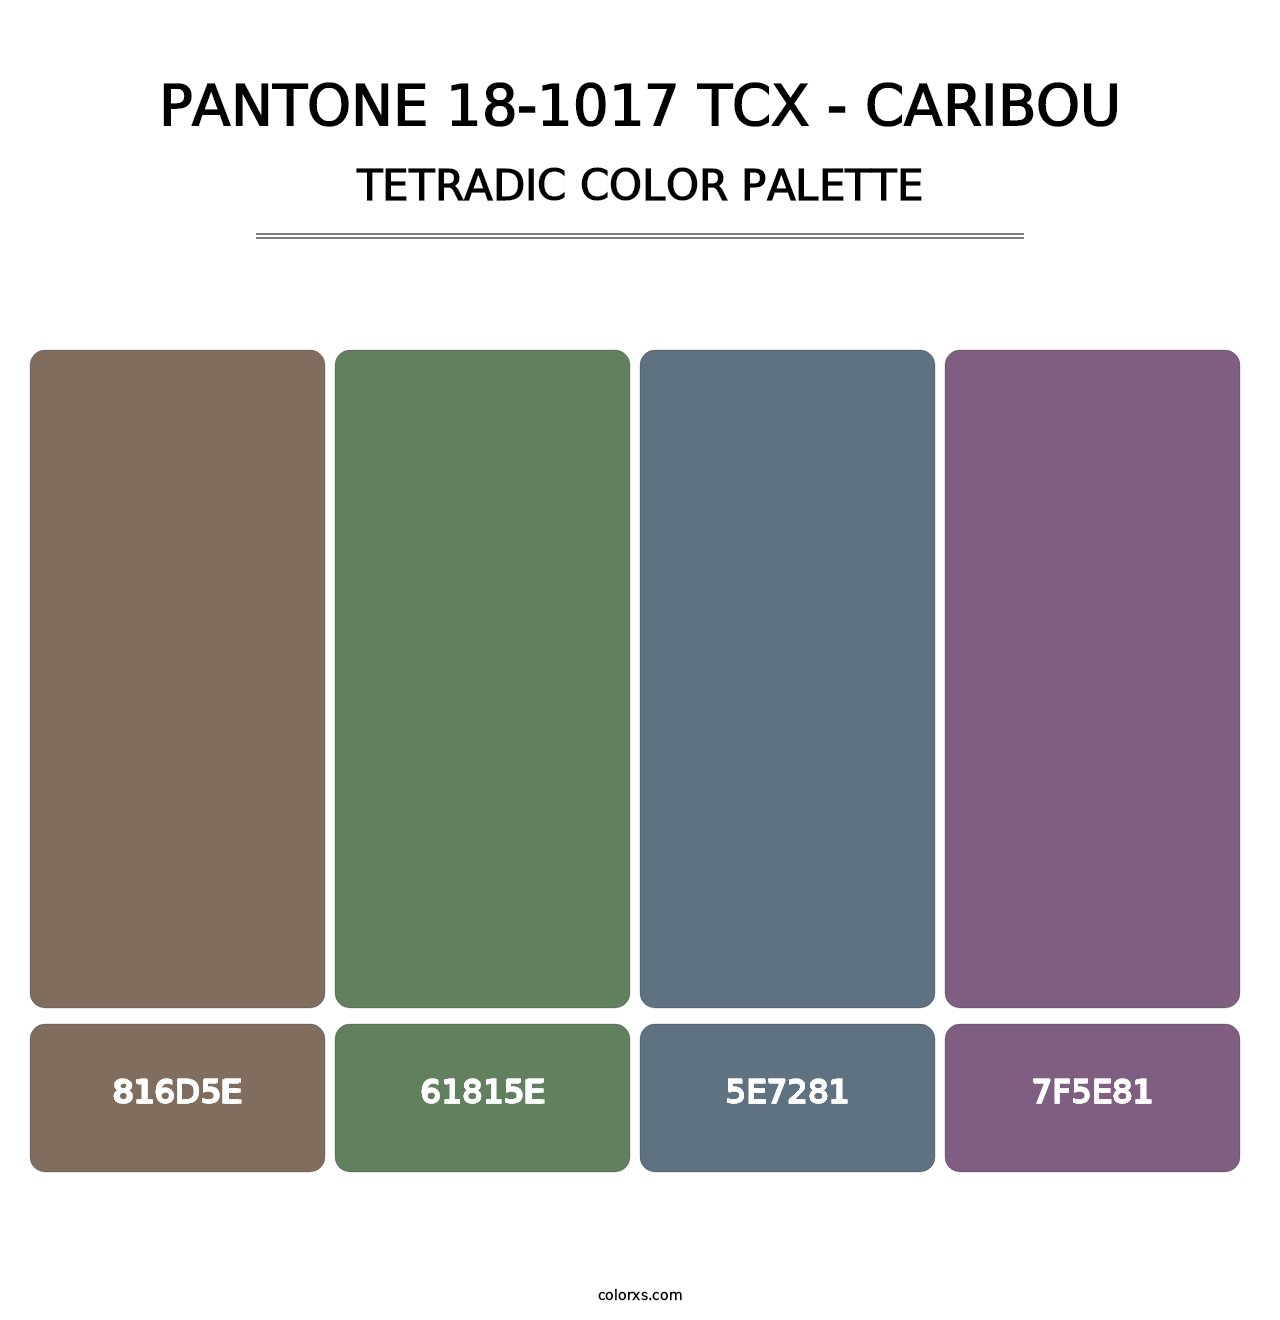 PANTONE 18-1017 TCX - Caribou - Tetradic Color Palette